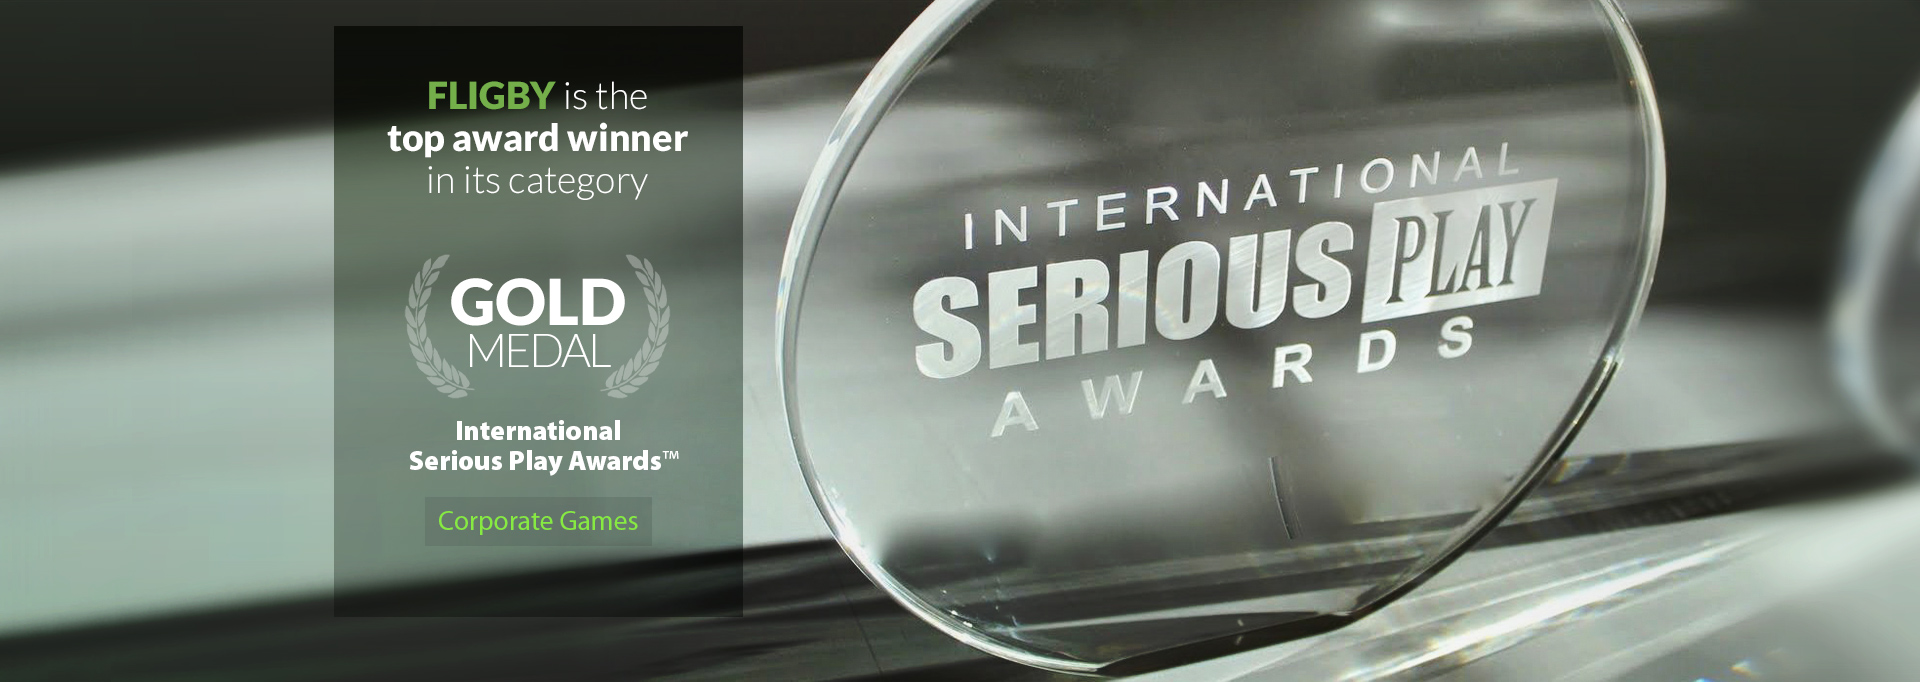 Gold Medal at International Serious Play Awards, 2012